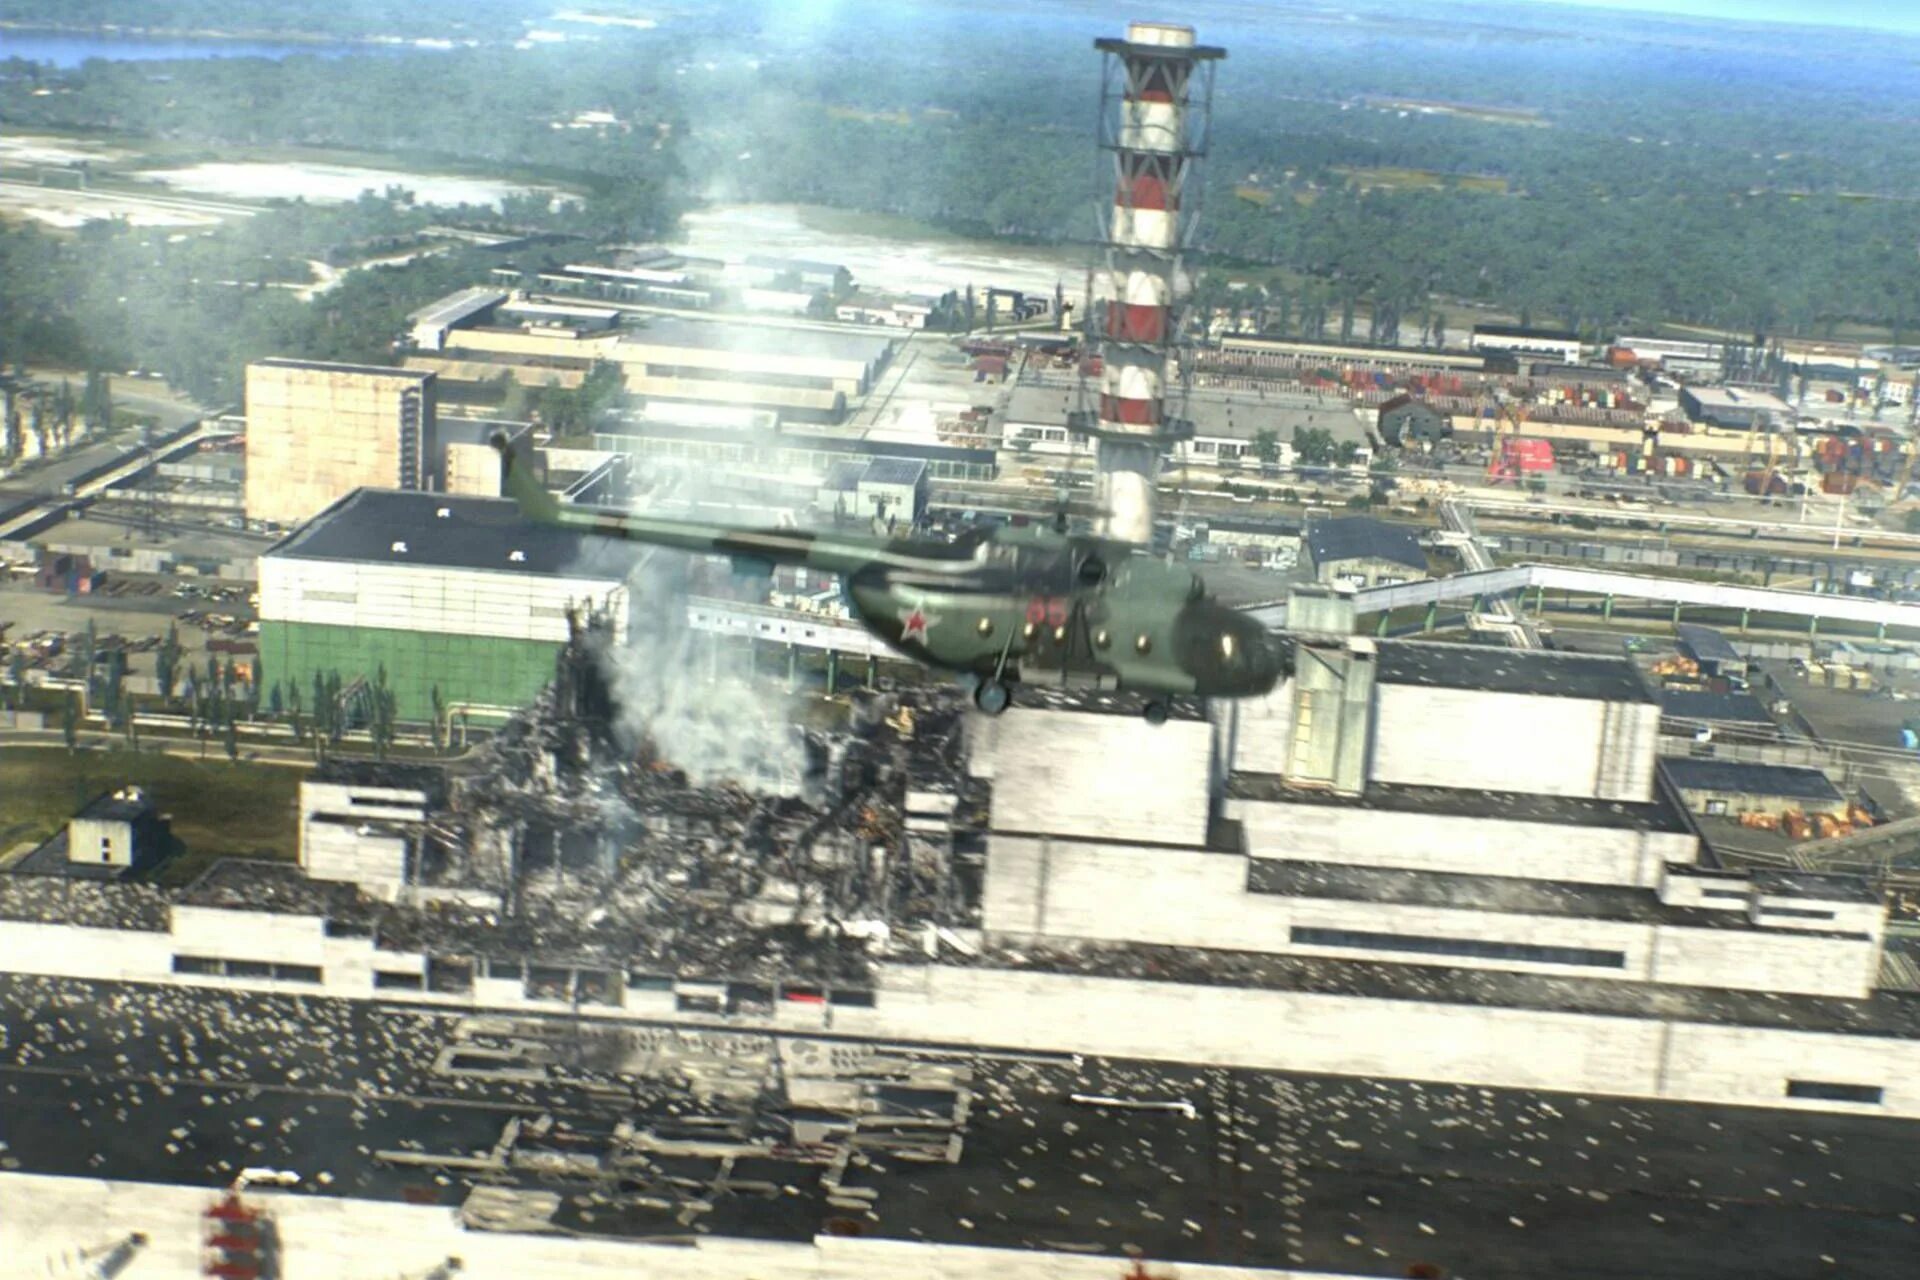 Chernobyl disaster. Чернобыльская АЭС 1986. Чернобыль 26.04.1986. Чернобыльская АЭС 1986 реактор. Чернобыльская АЭС катастрофа 26 апреля 1986.